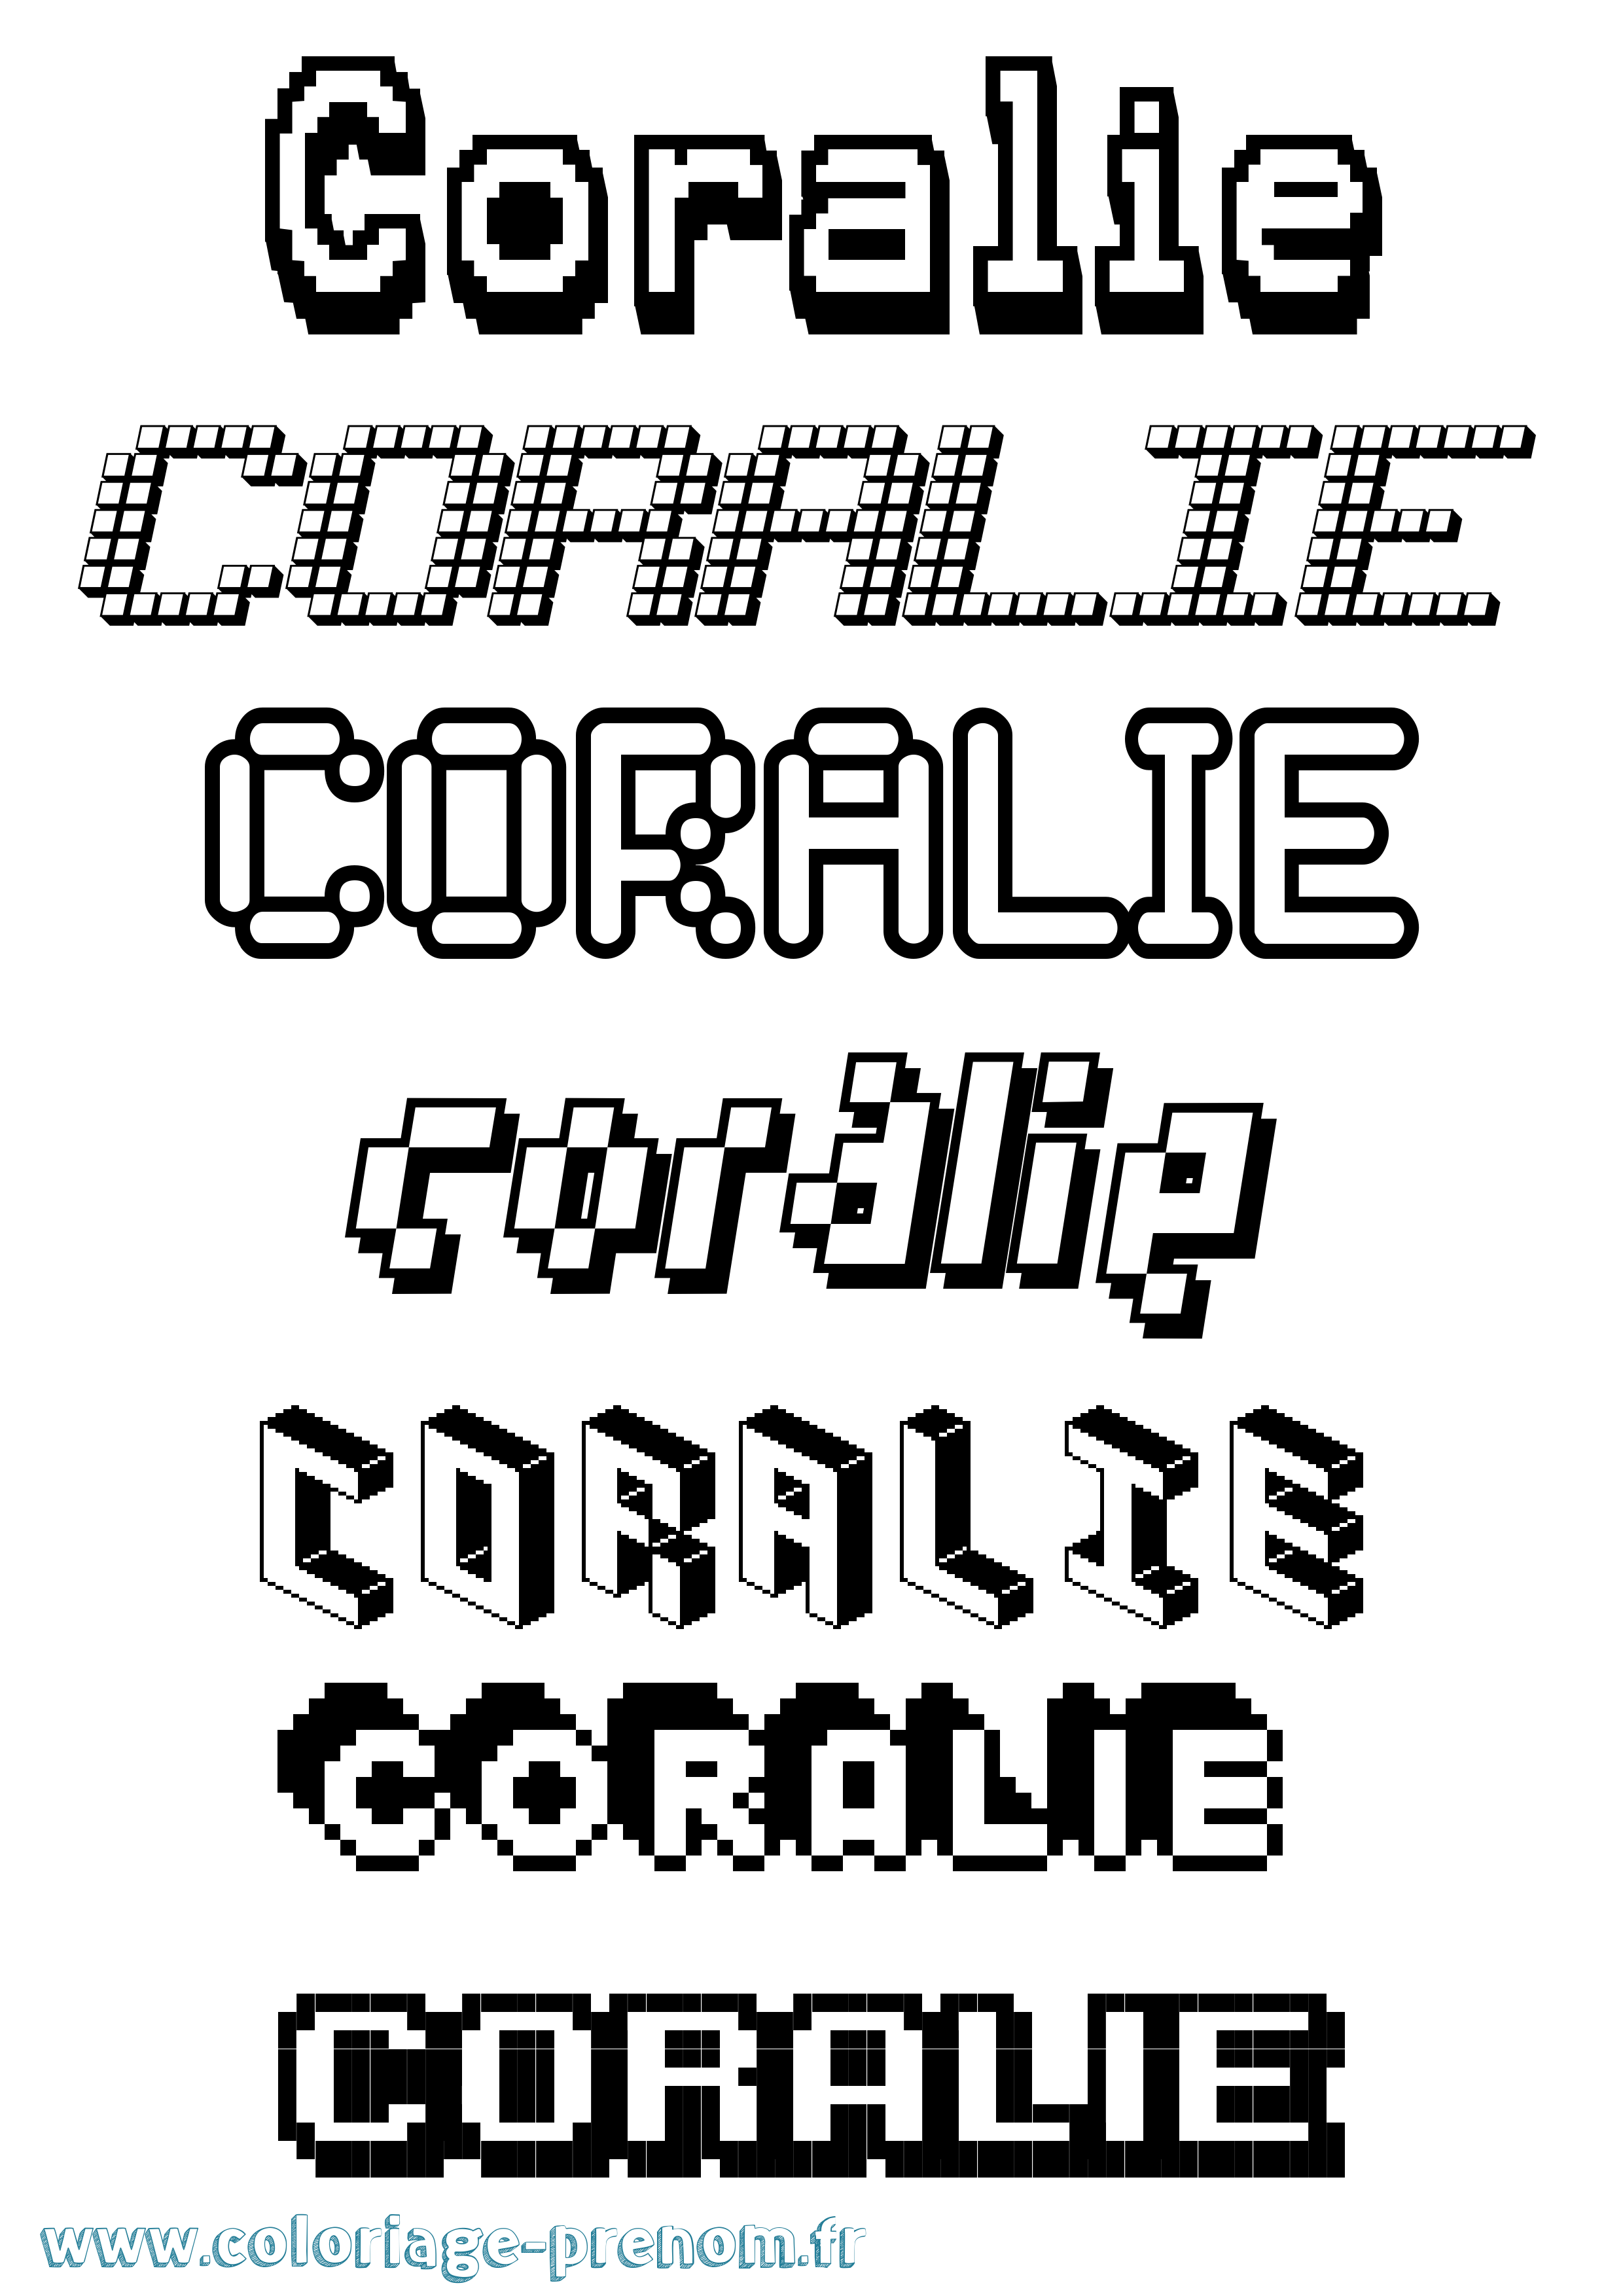 Coloriage prénom Coralie